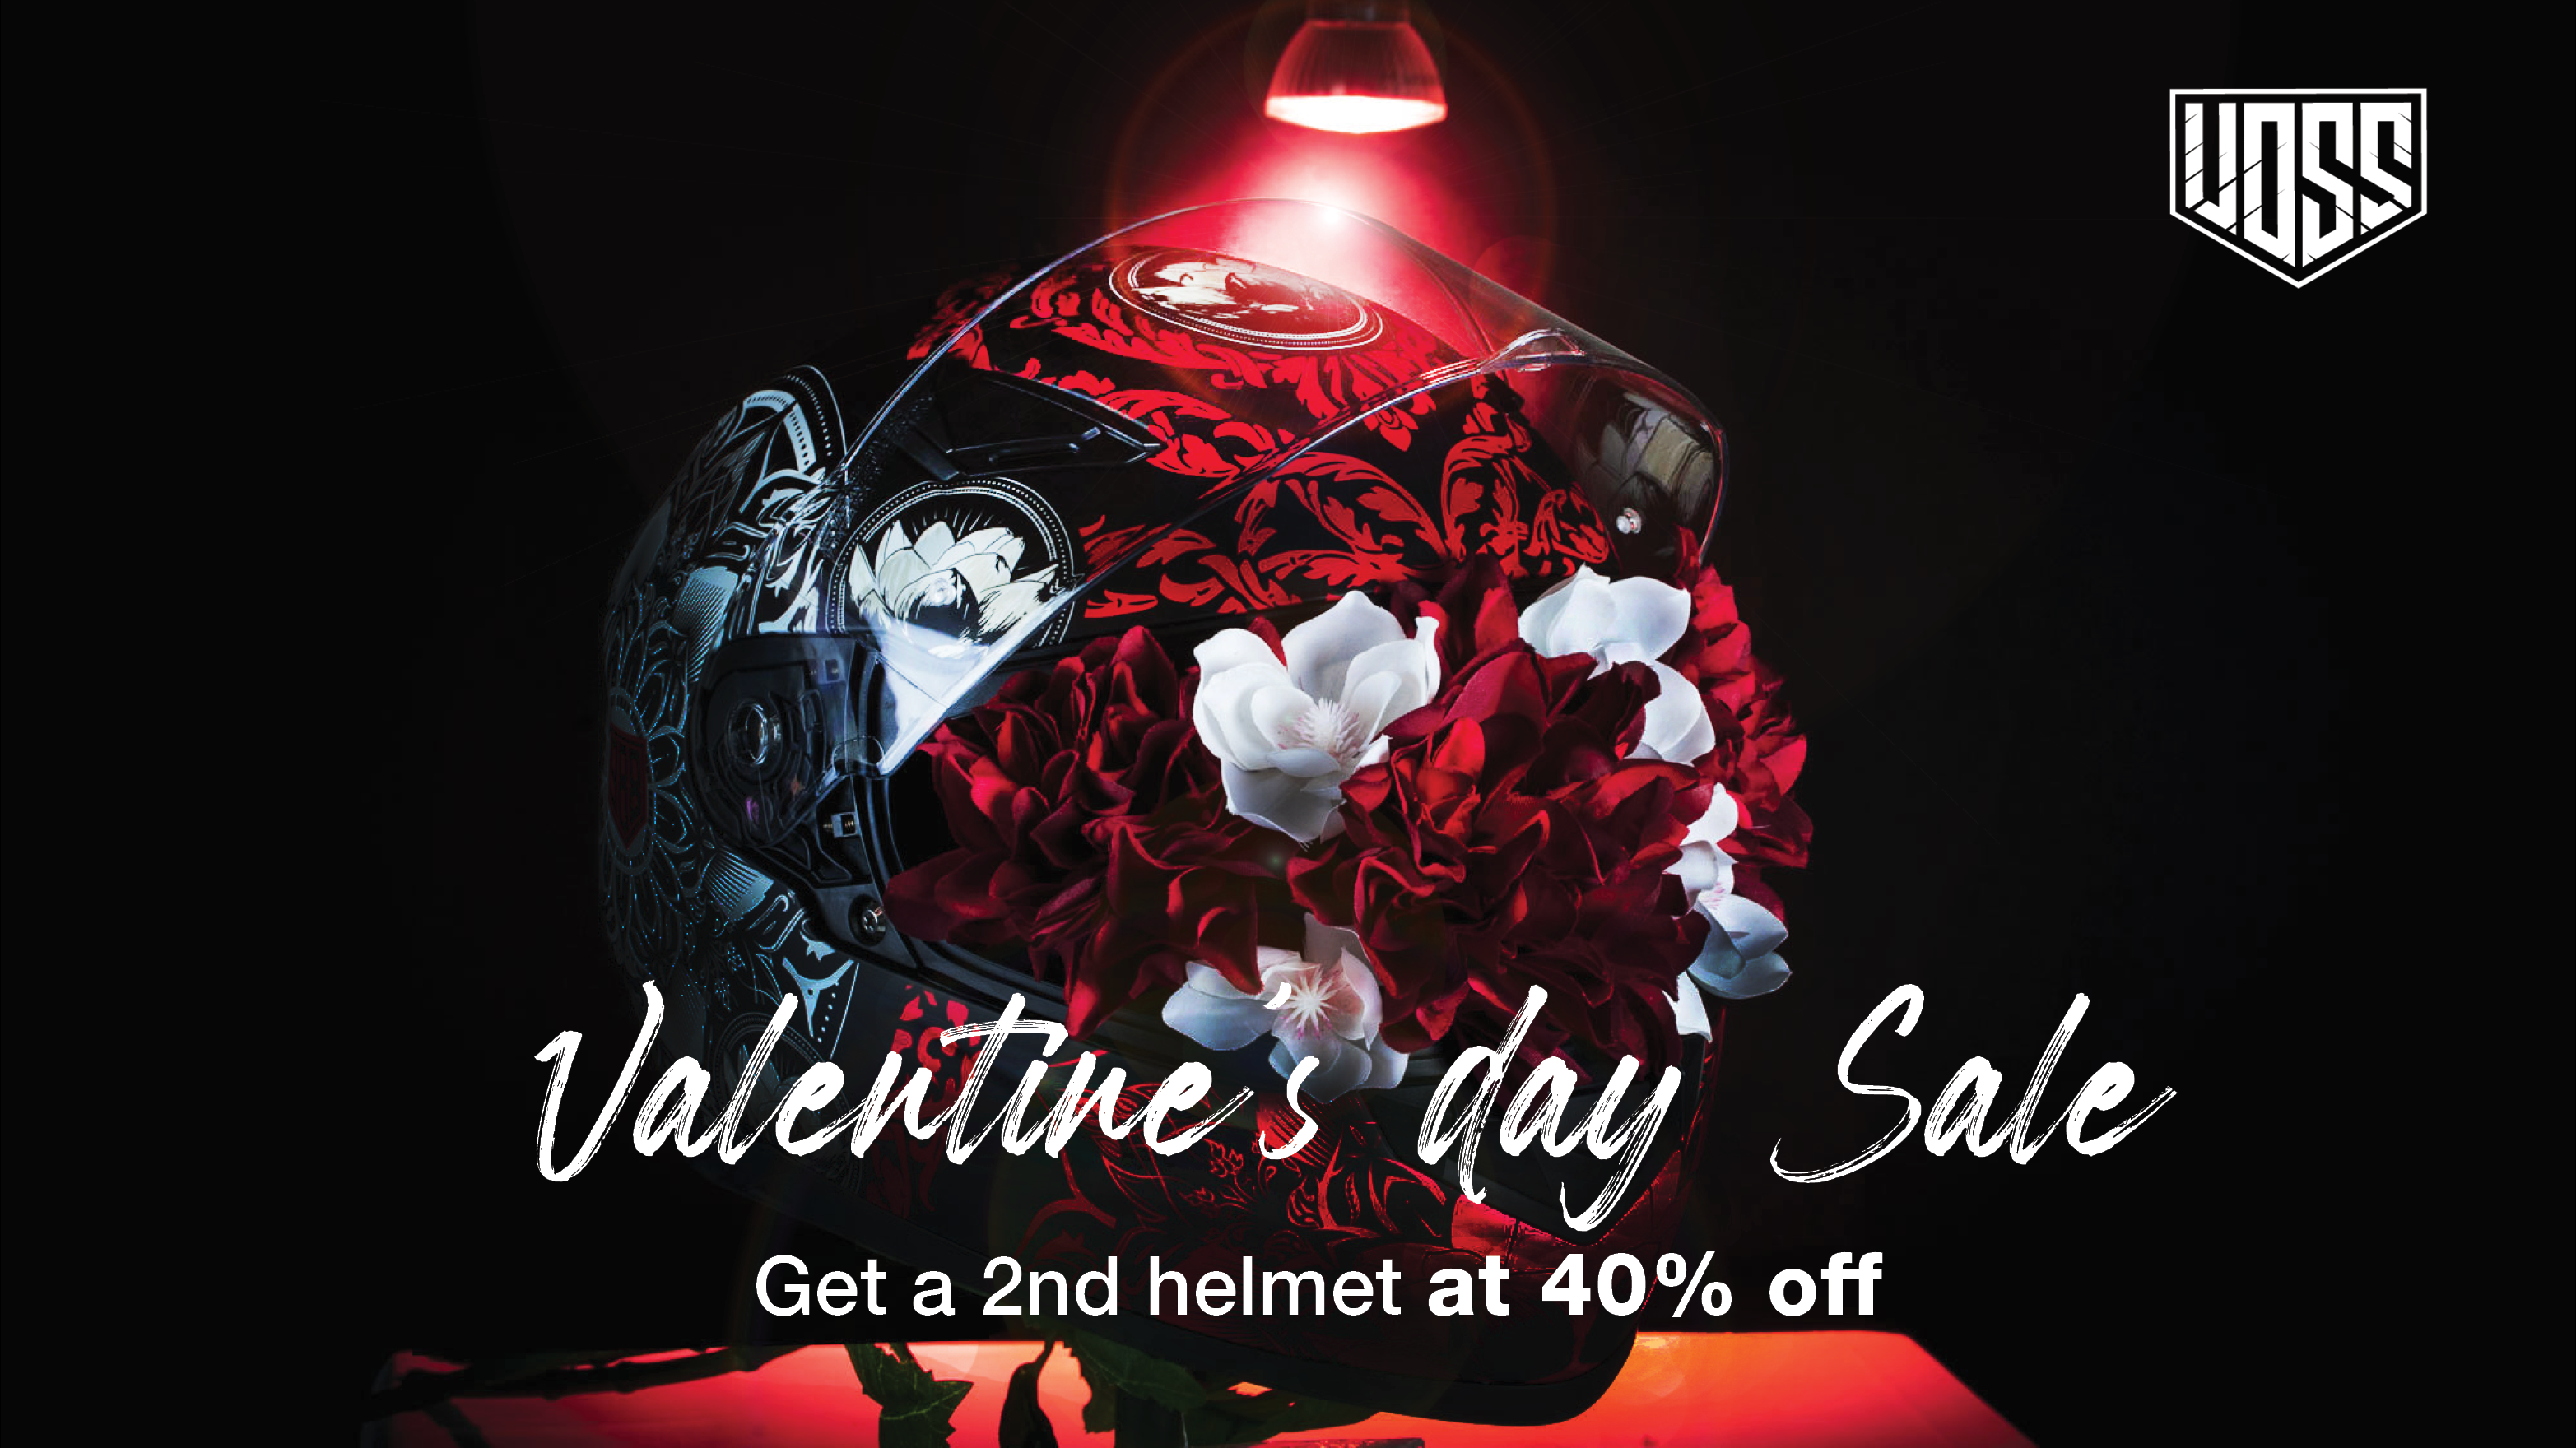 Voss helmets Valentine's day sale